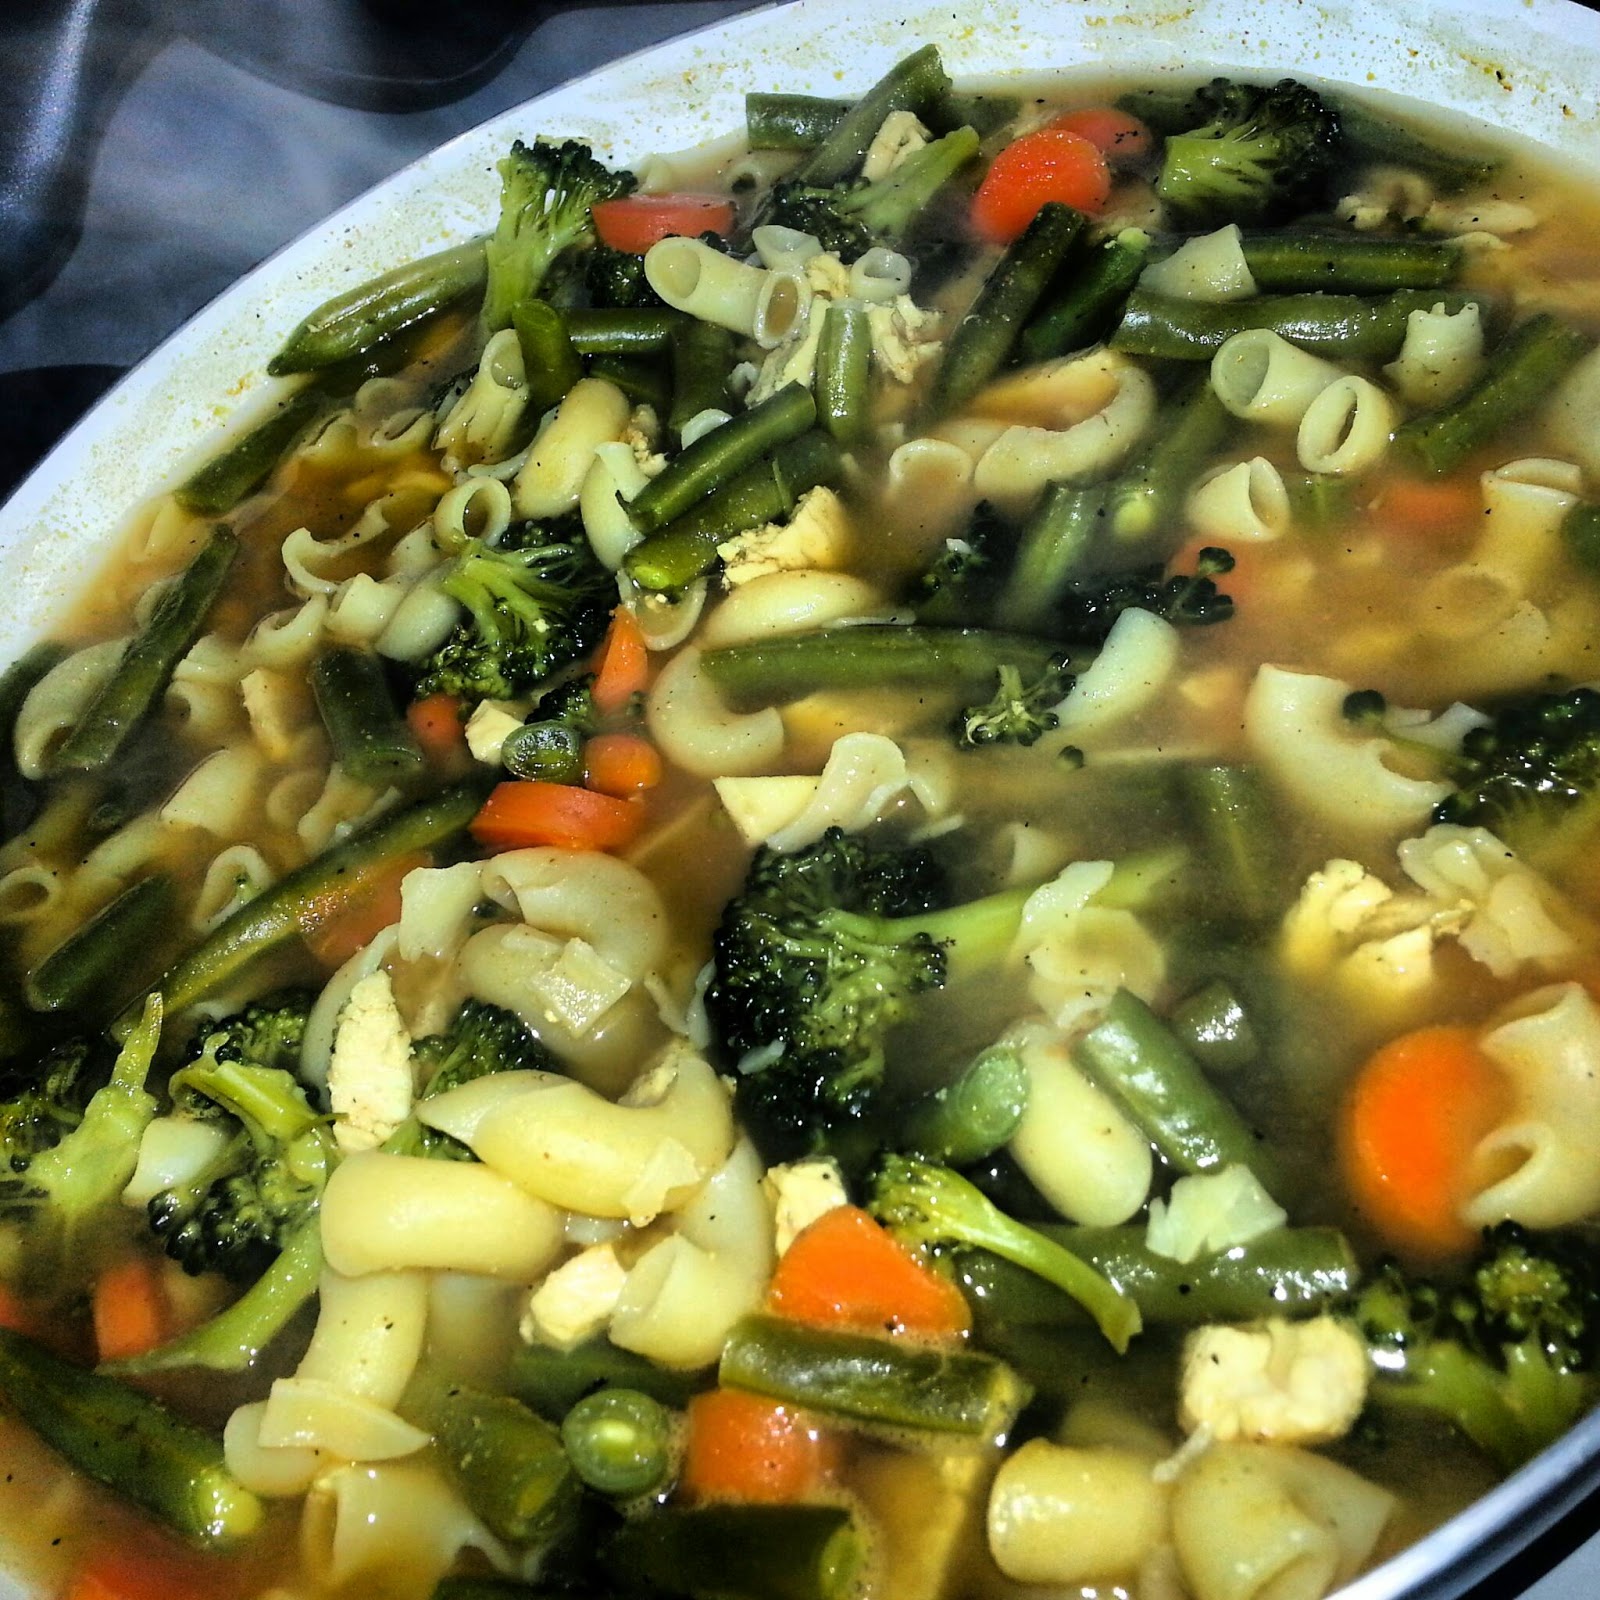 GlutenfreeJourney: Chicken noodle soup